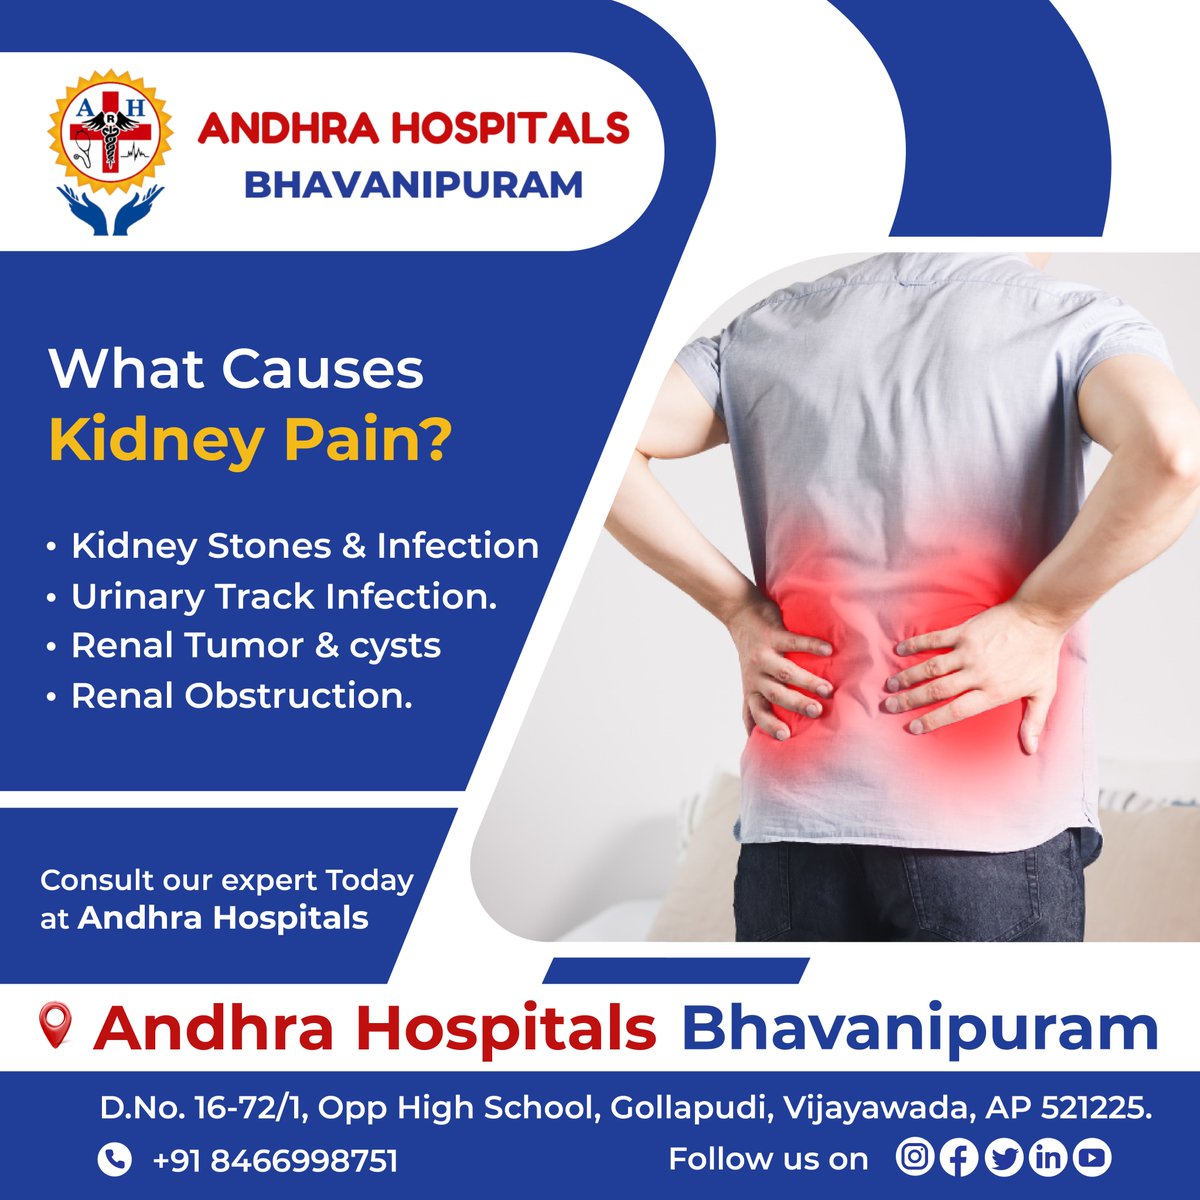 For More Info Visit Us: andhrahospitals.org/ah
Call Us on:+91-8466998751
.
#andhrahospitalsbhavanipuram #AndhraHospitals #bhavanipuram #kidneyproblem #kidneypain #kindneyfunction #kidneydisease #kidneytransplant #kidneyfailure #dialysis #Nephrology #nephrologist #nephron